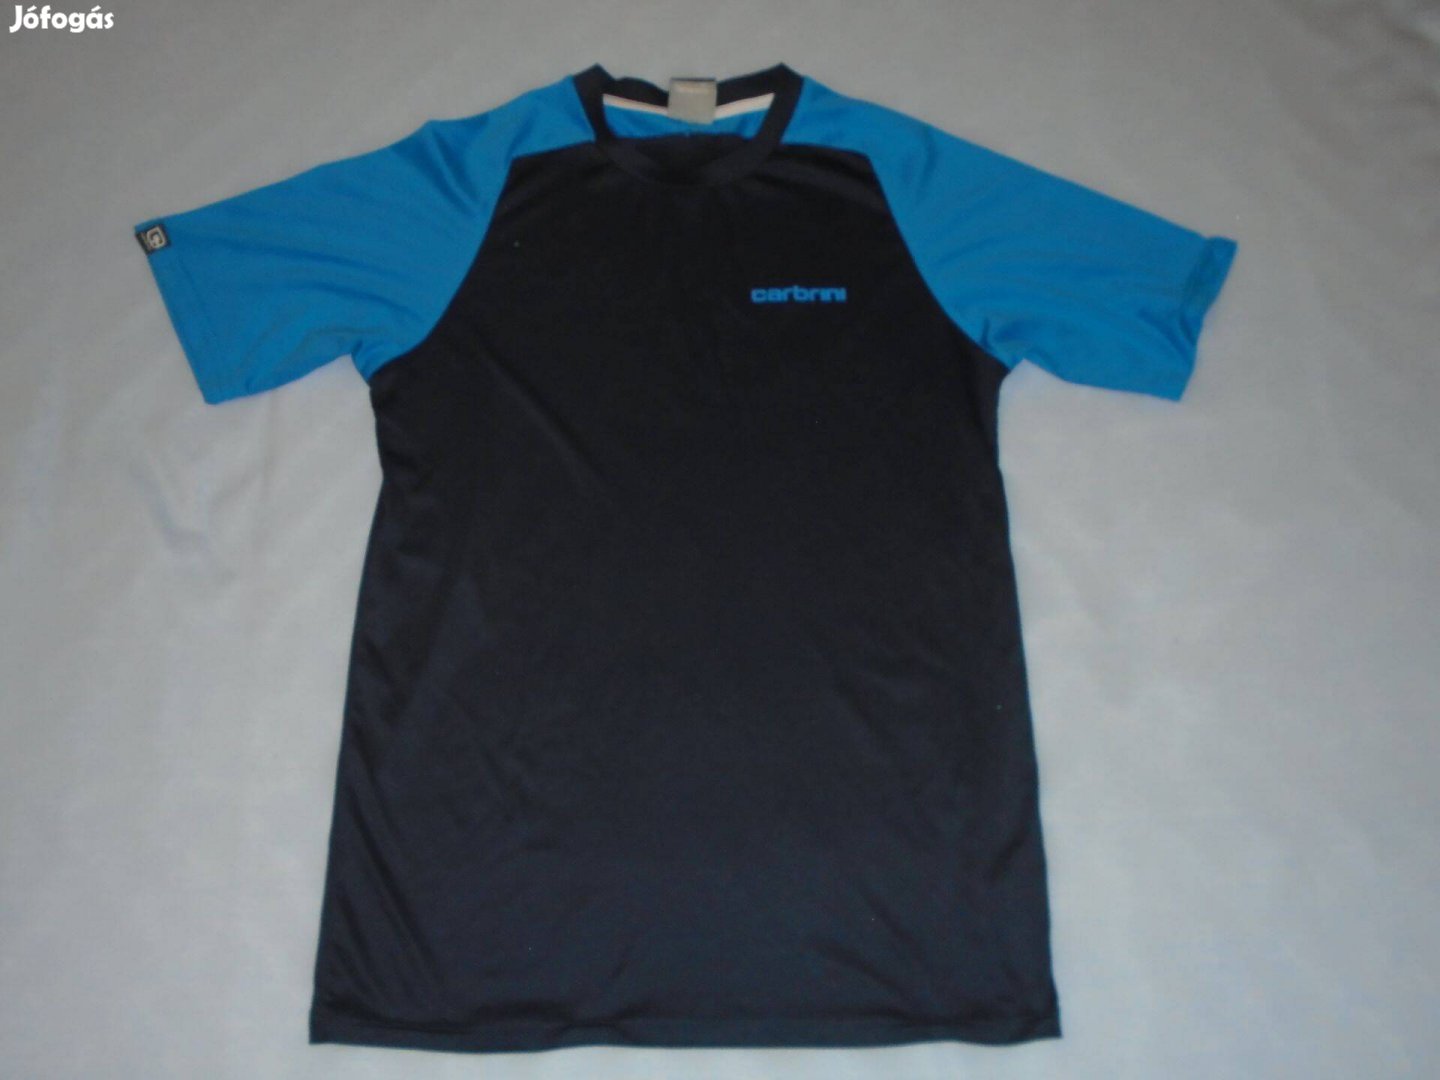 Újszerű kék S méretű póló (méret S)